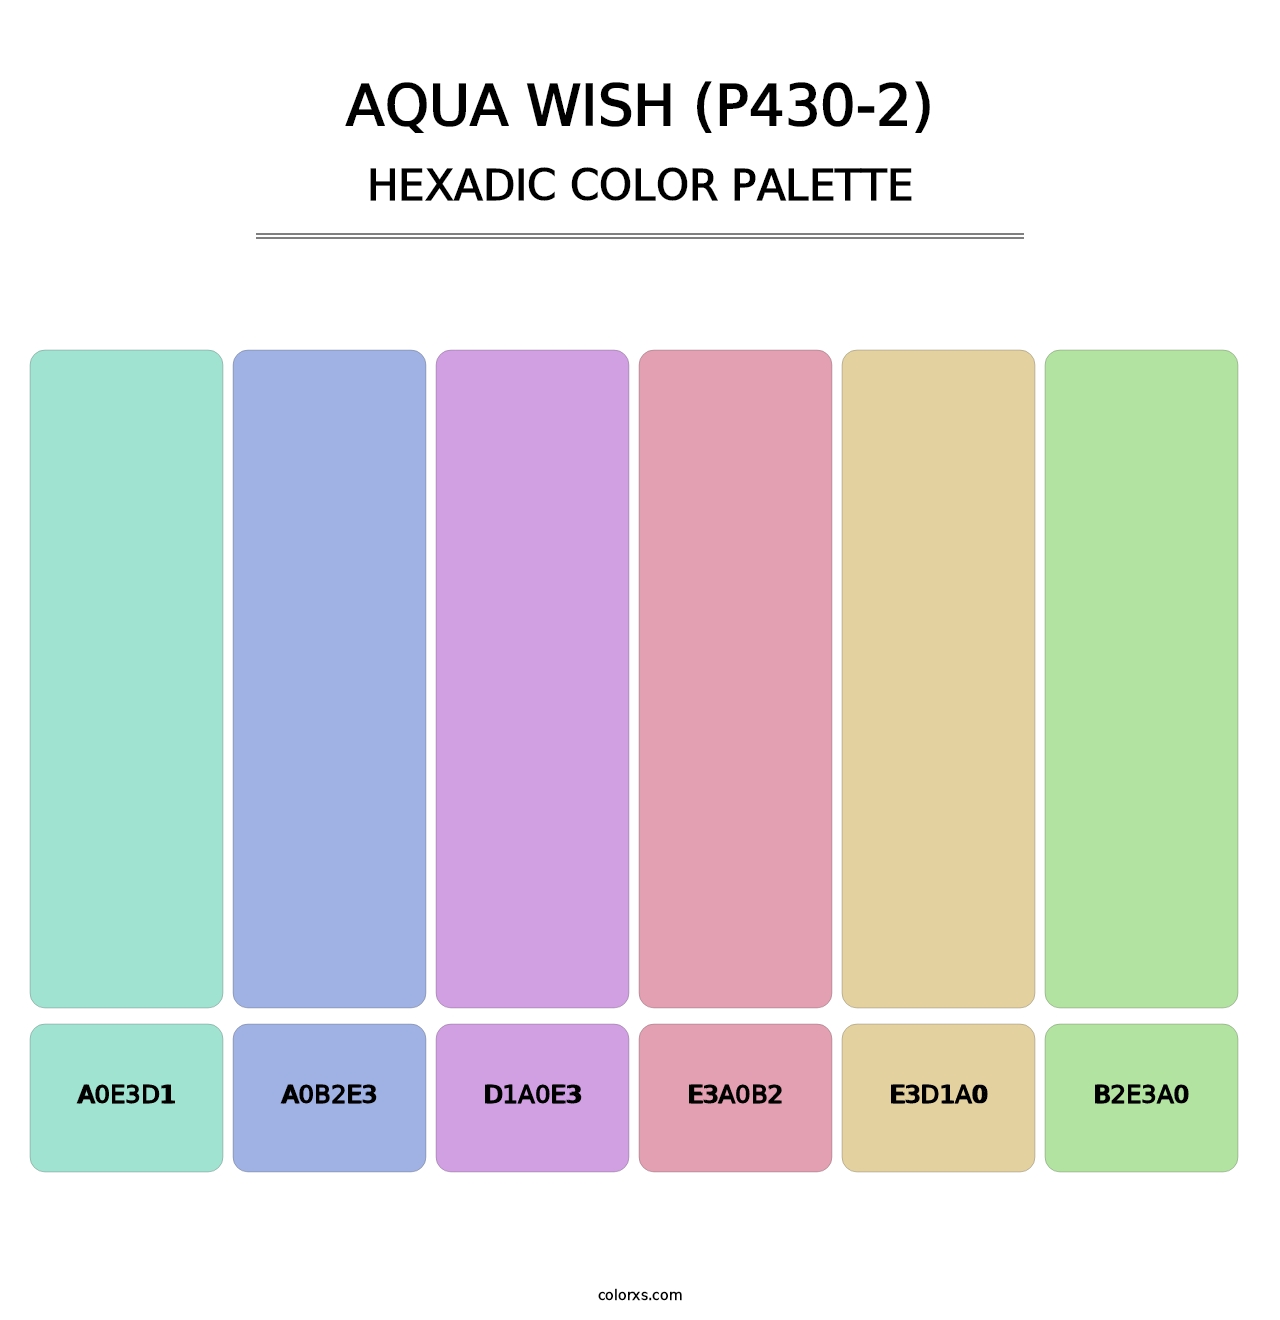 Aqua Wish (P430-2) - Hexadic Color Palette